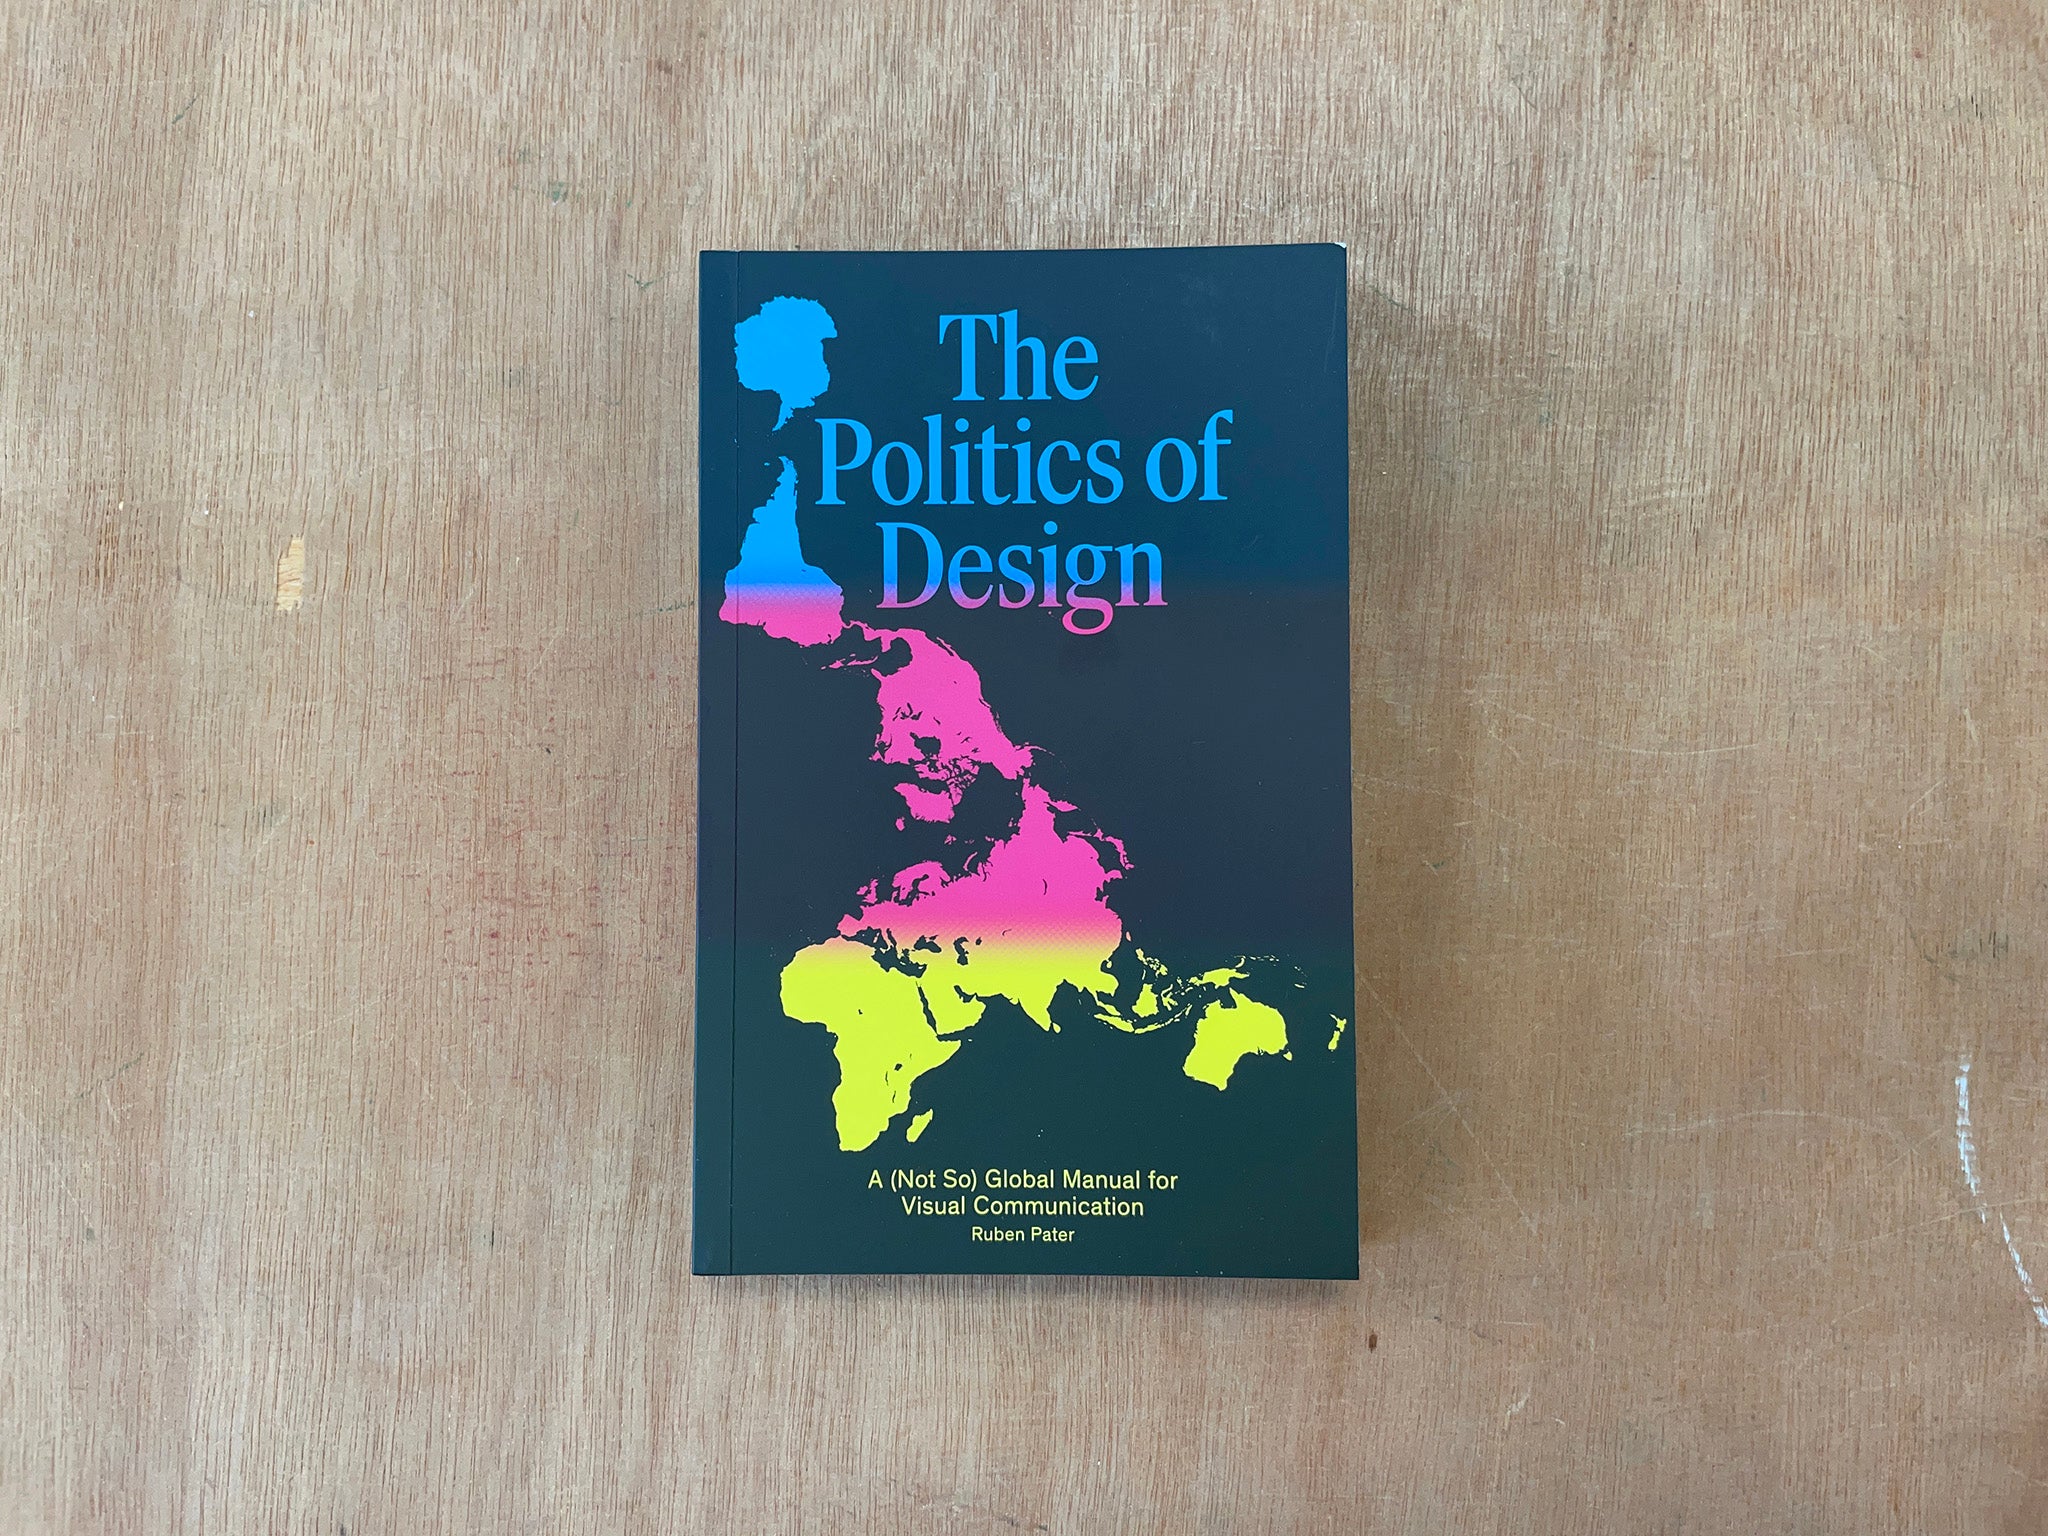 THE POLITICS OF DESIGN by Ruben Pater